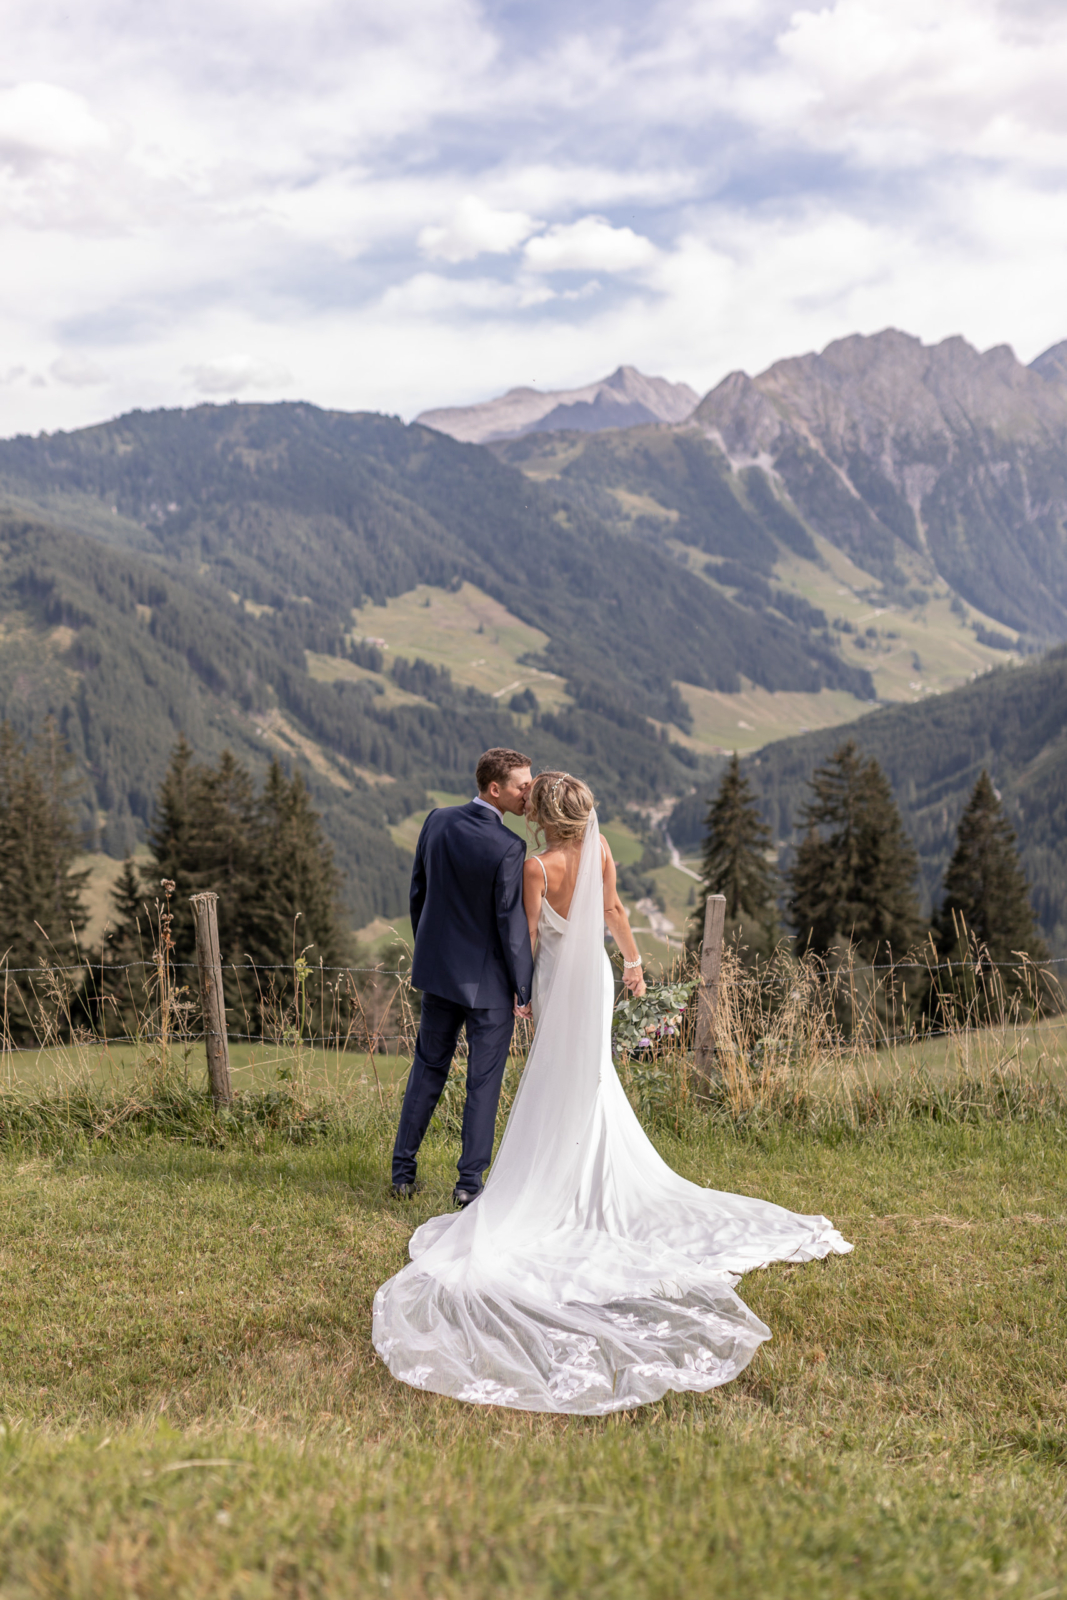 wedding photos in the mountains in Austria